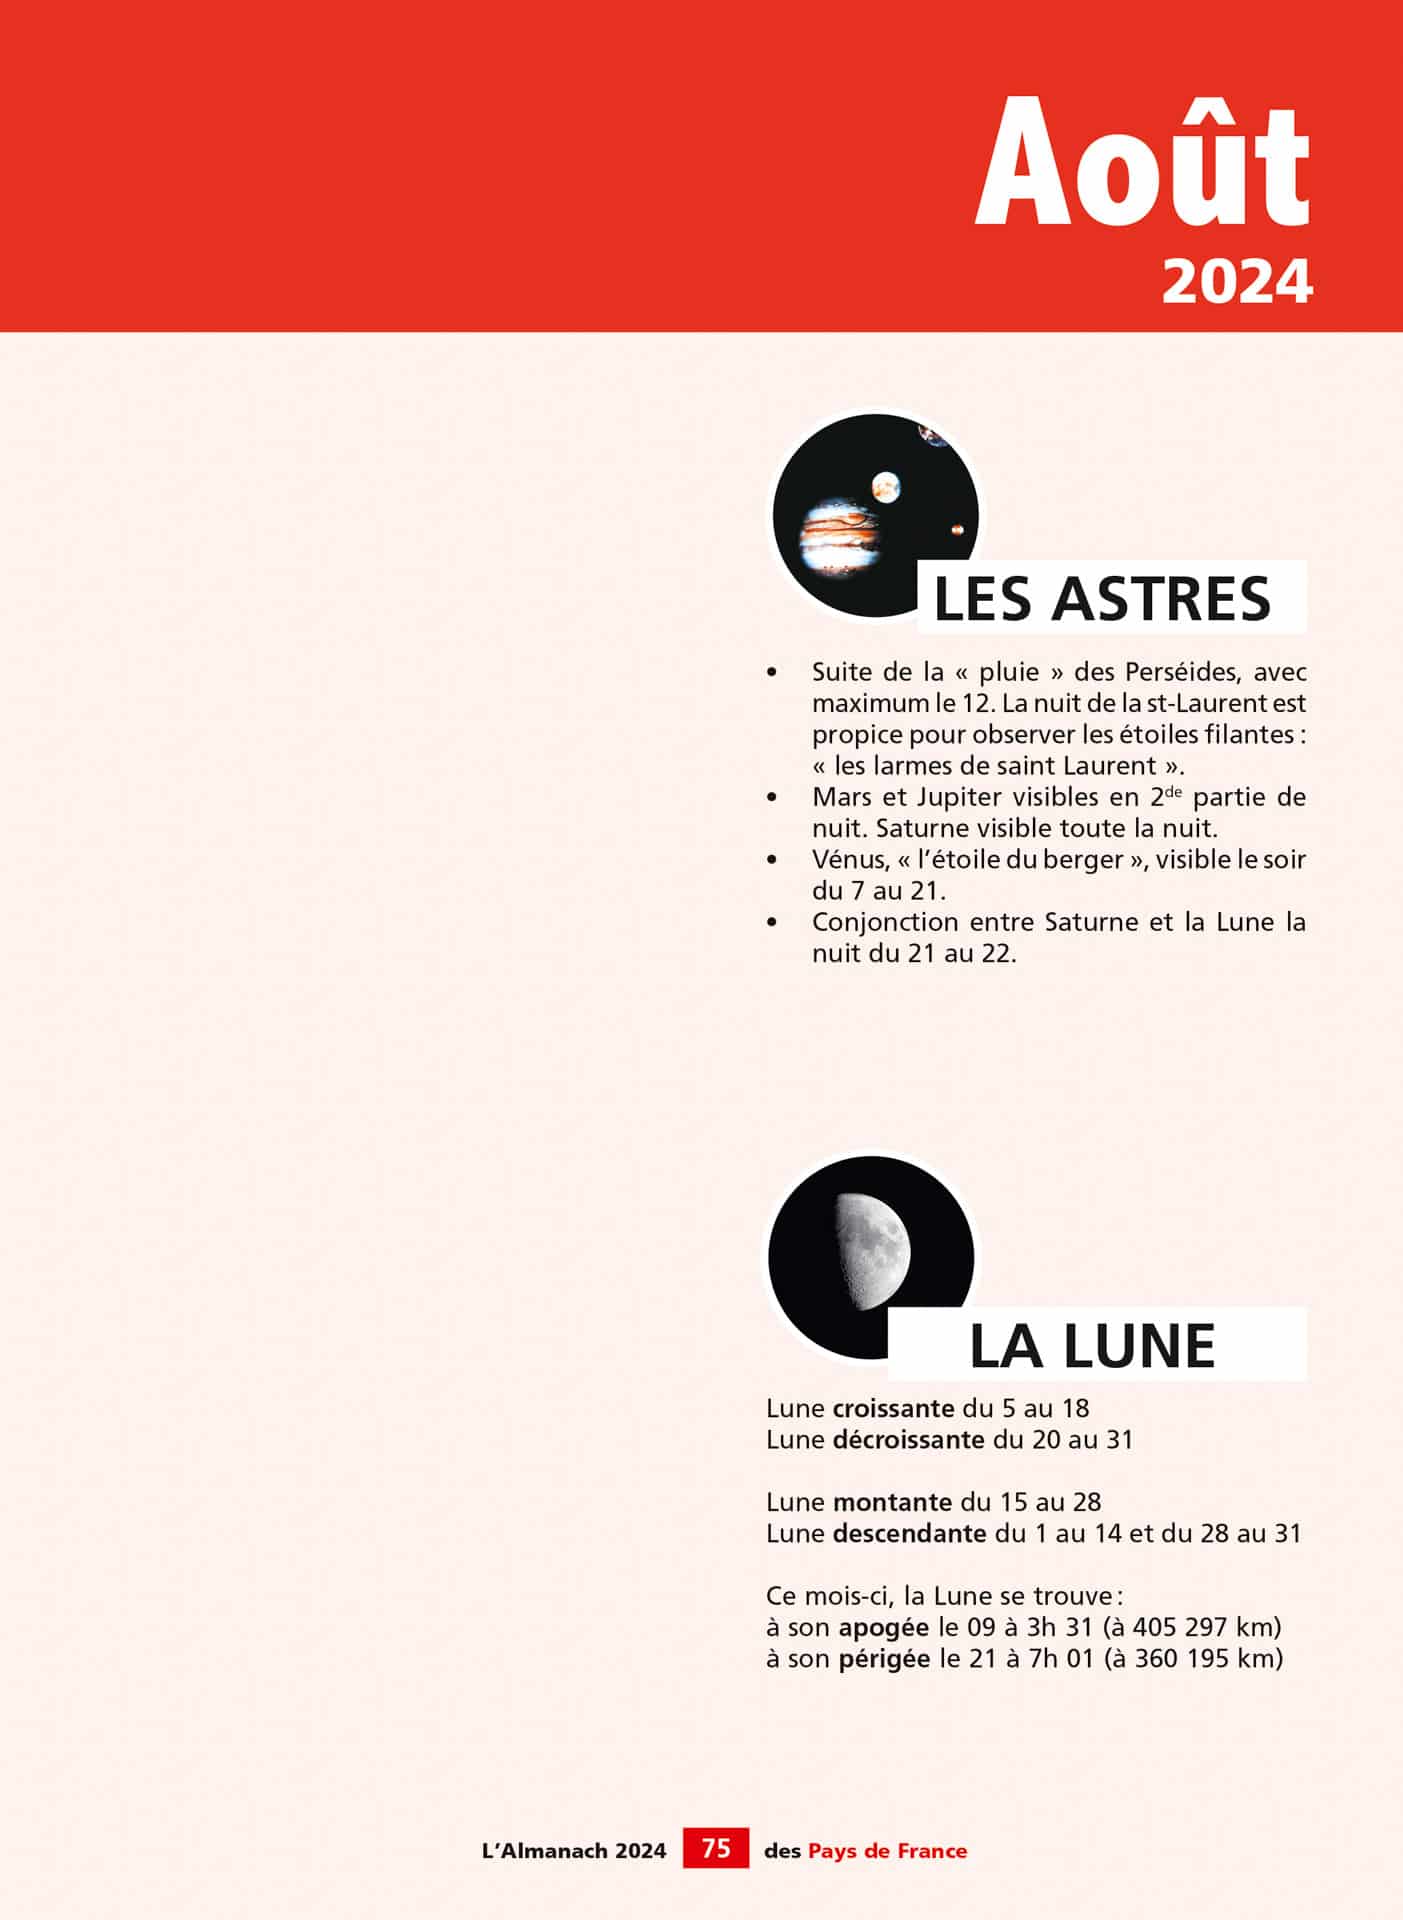 Almanach 2024 du Jardinier, votre agenda illustré